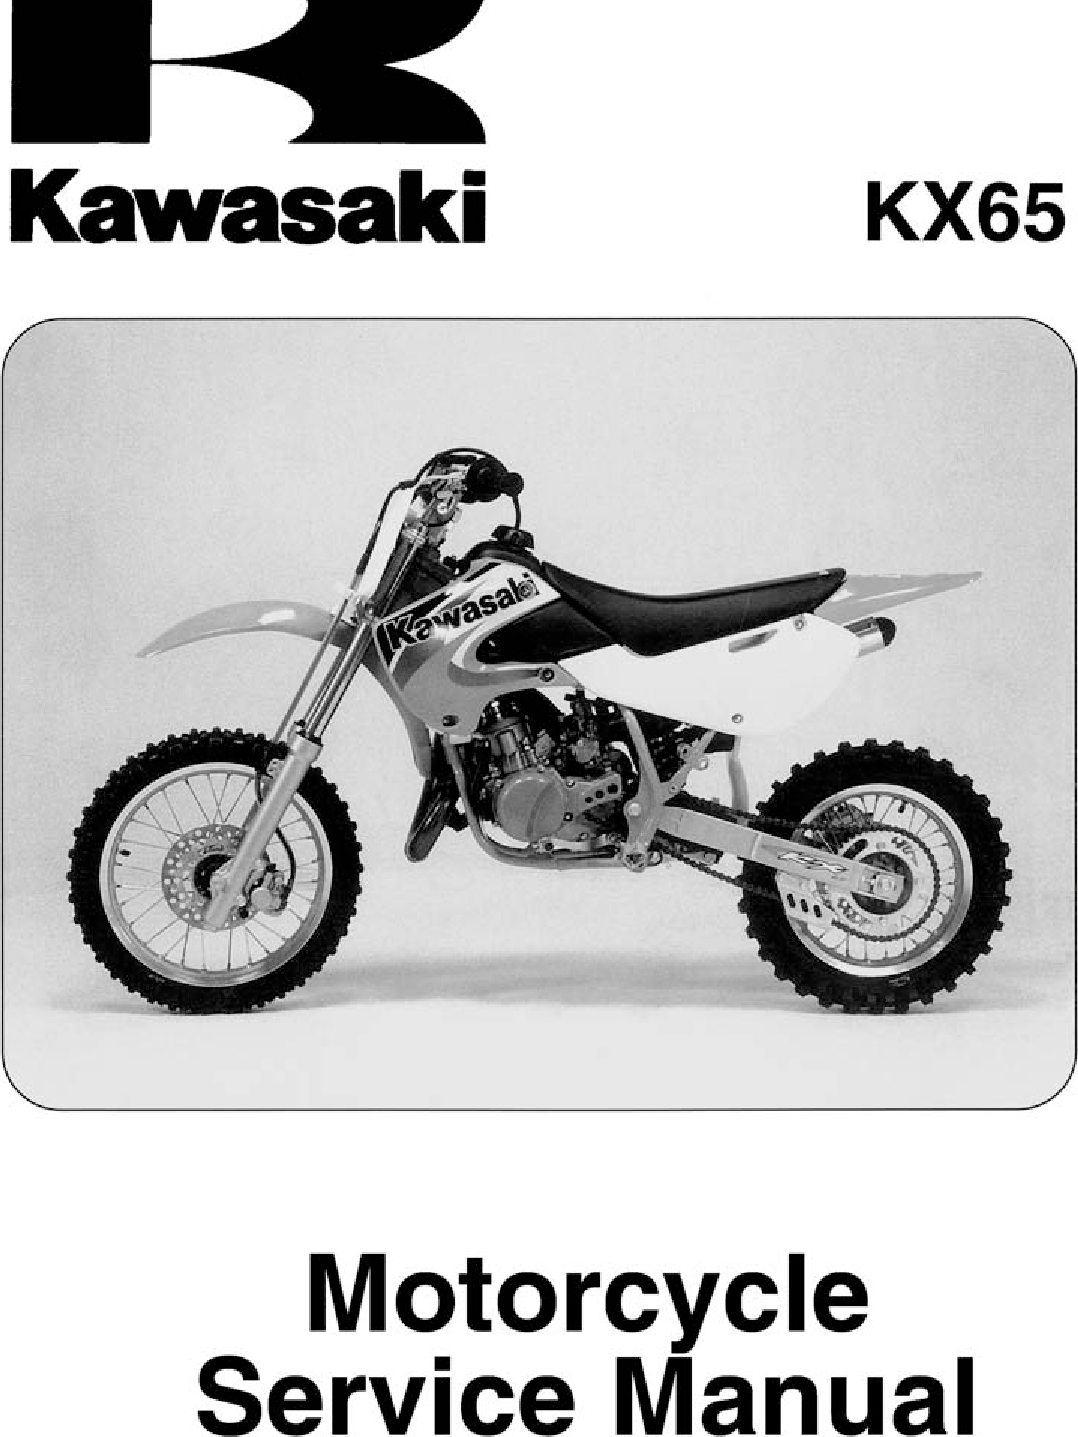 skal Afvise forfriskende Kawasaki KX65 .....v...r...[ D User Manual To The B5b24385 433b 4550 bd0a  cd4c3ce5484c